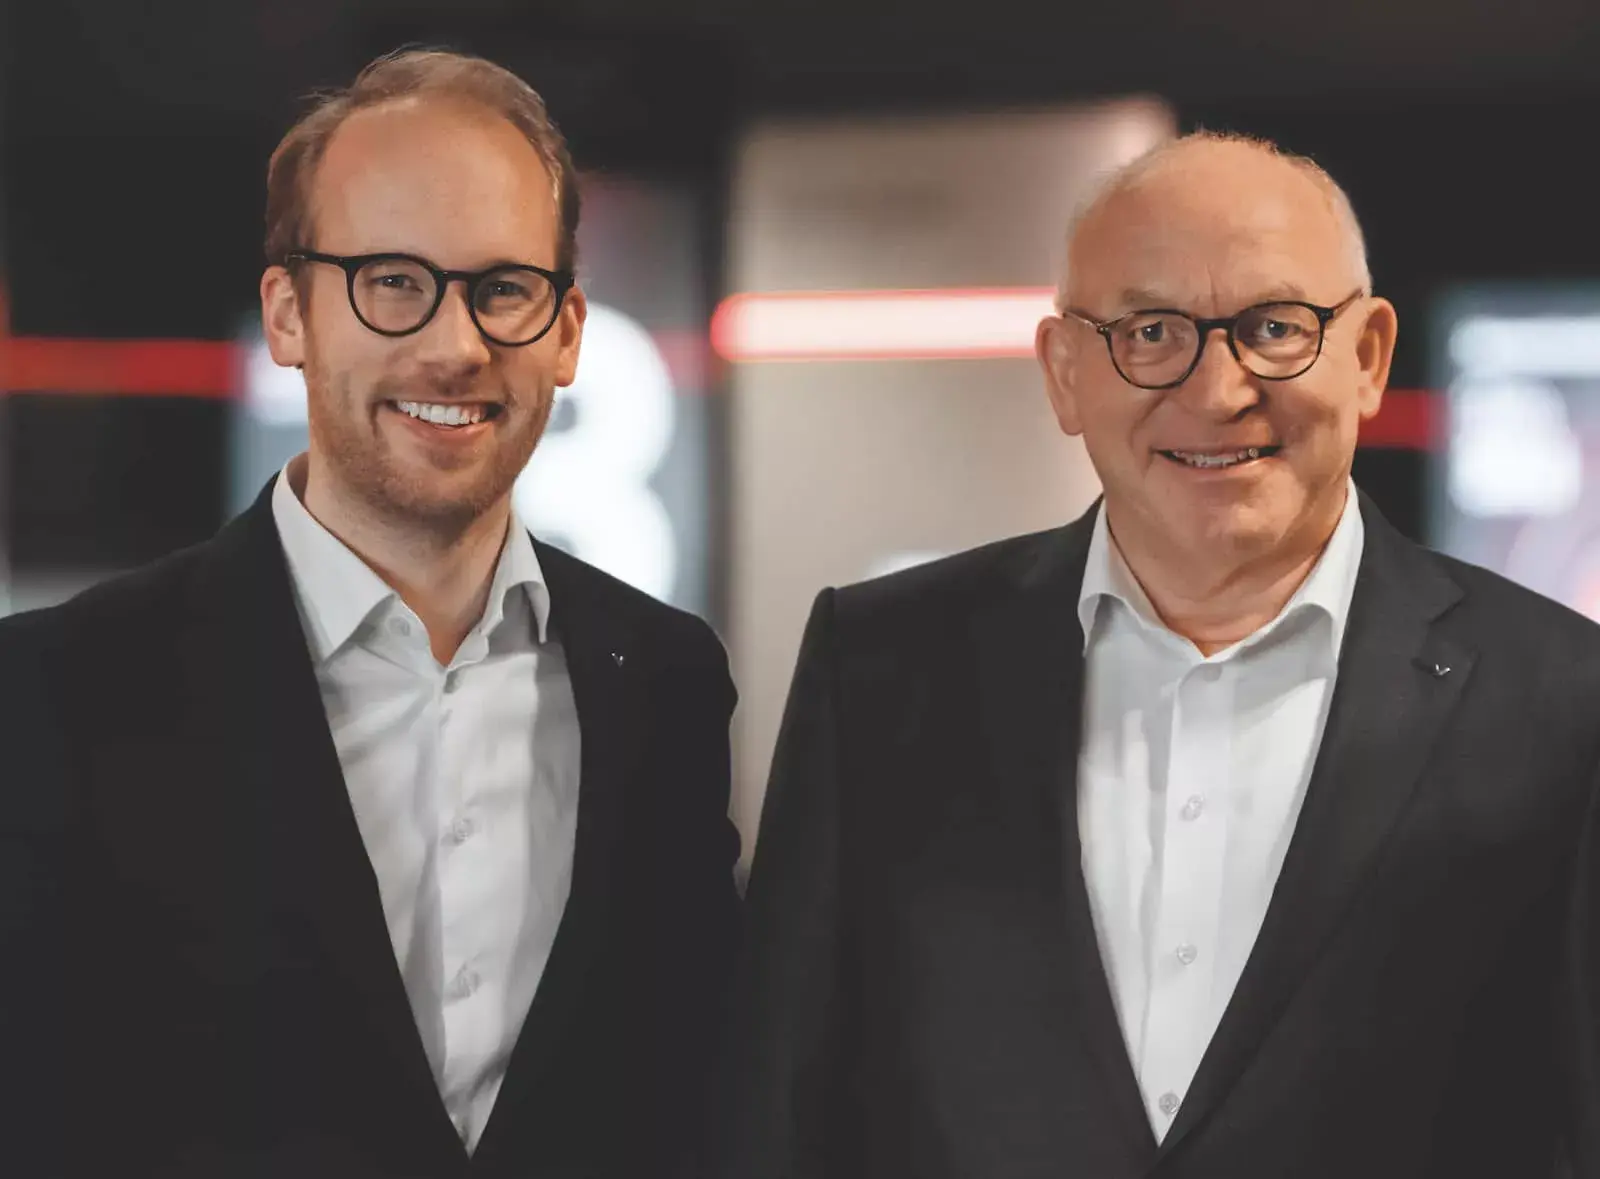 Étude de cas Asana - Viessmann - Max et Martin Viessmann, dirigeants de l’entreprise